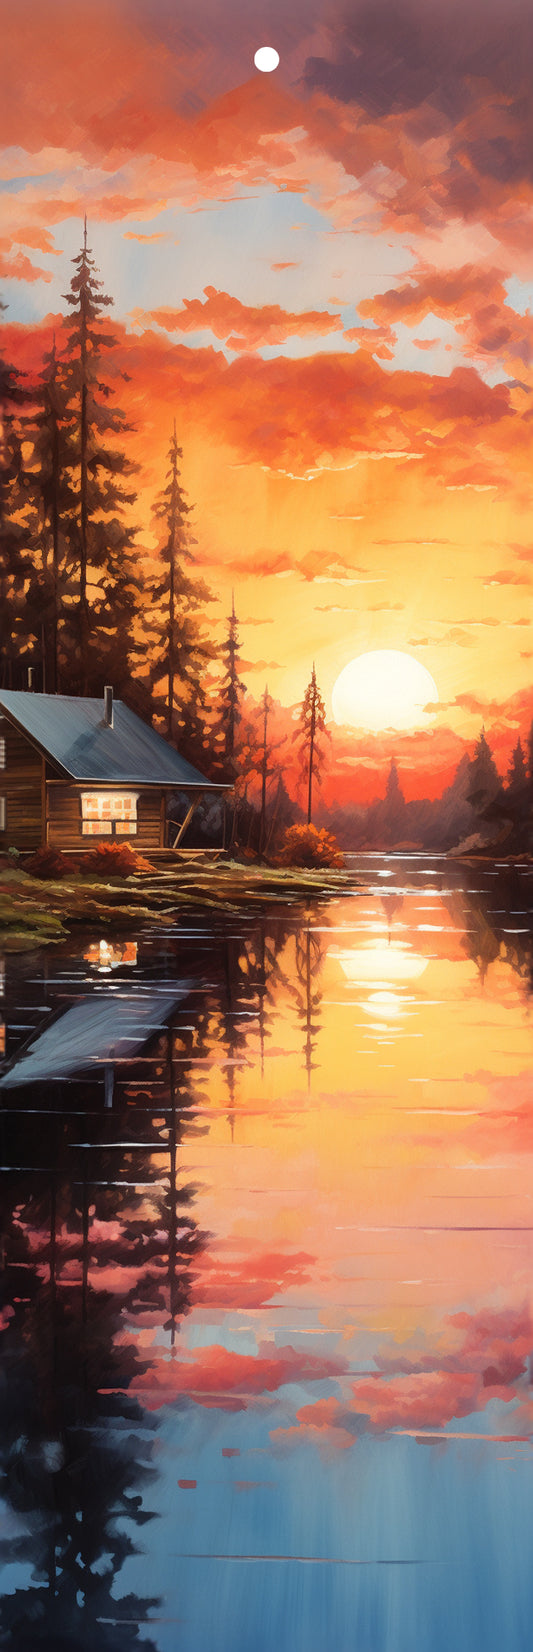 Sunset on a Lake House